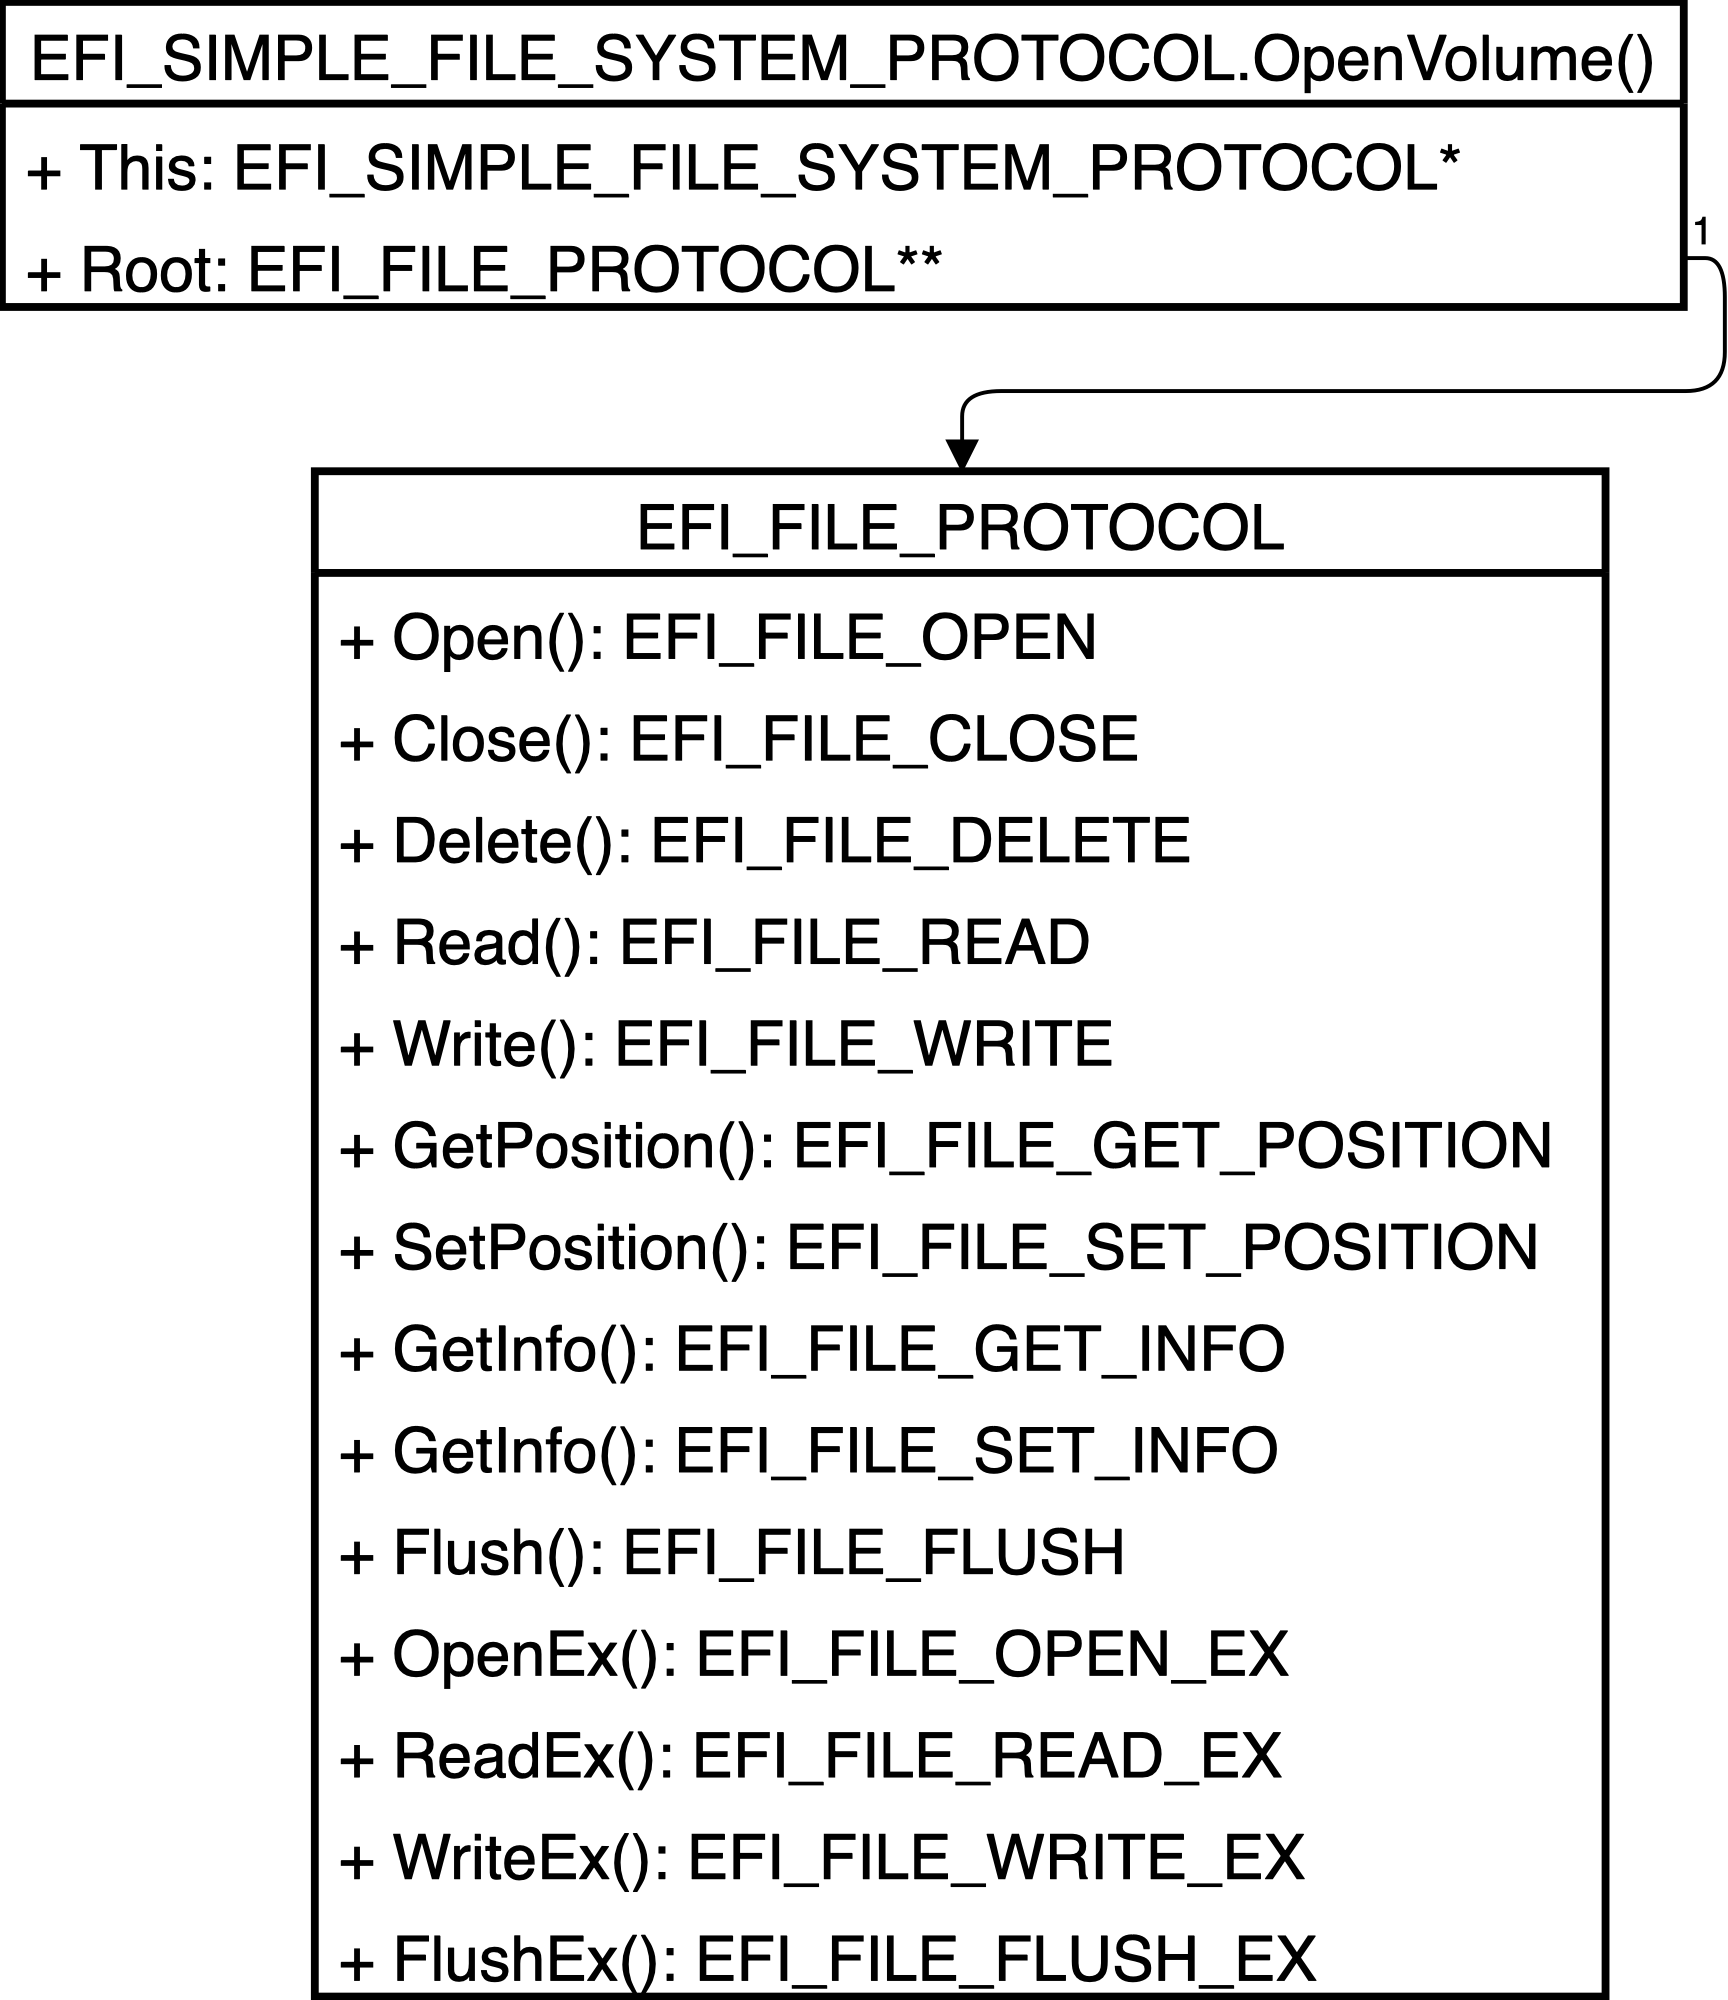 EFI Simple File System Protocol